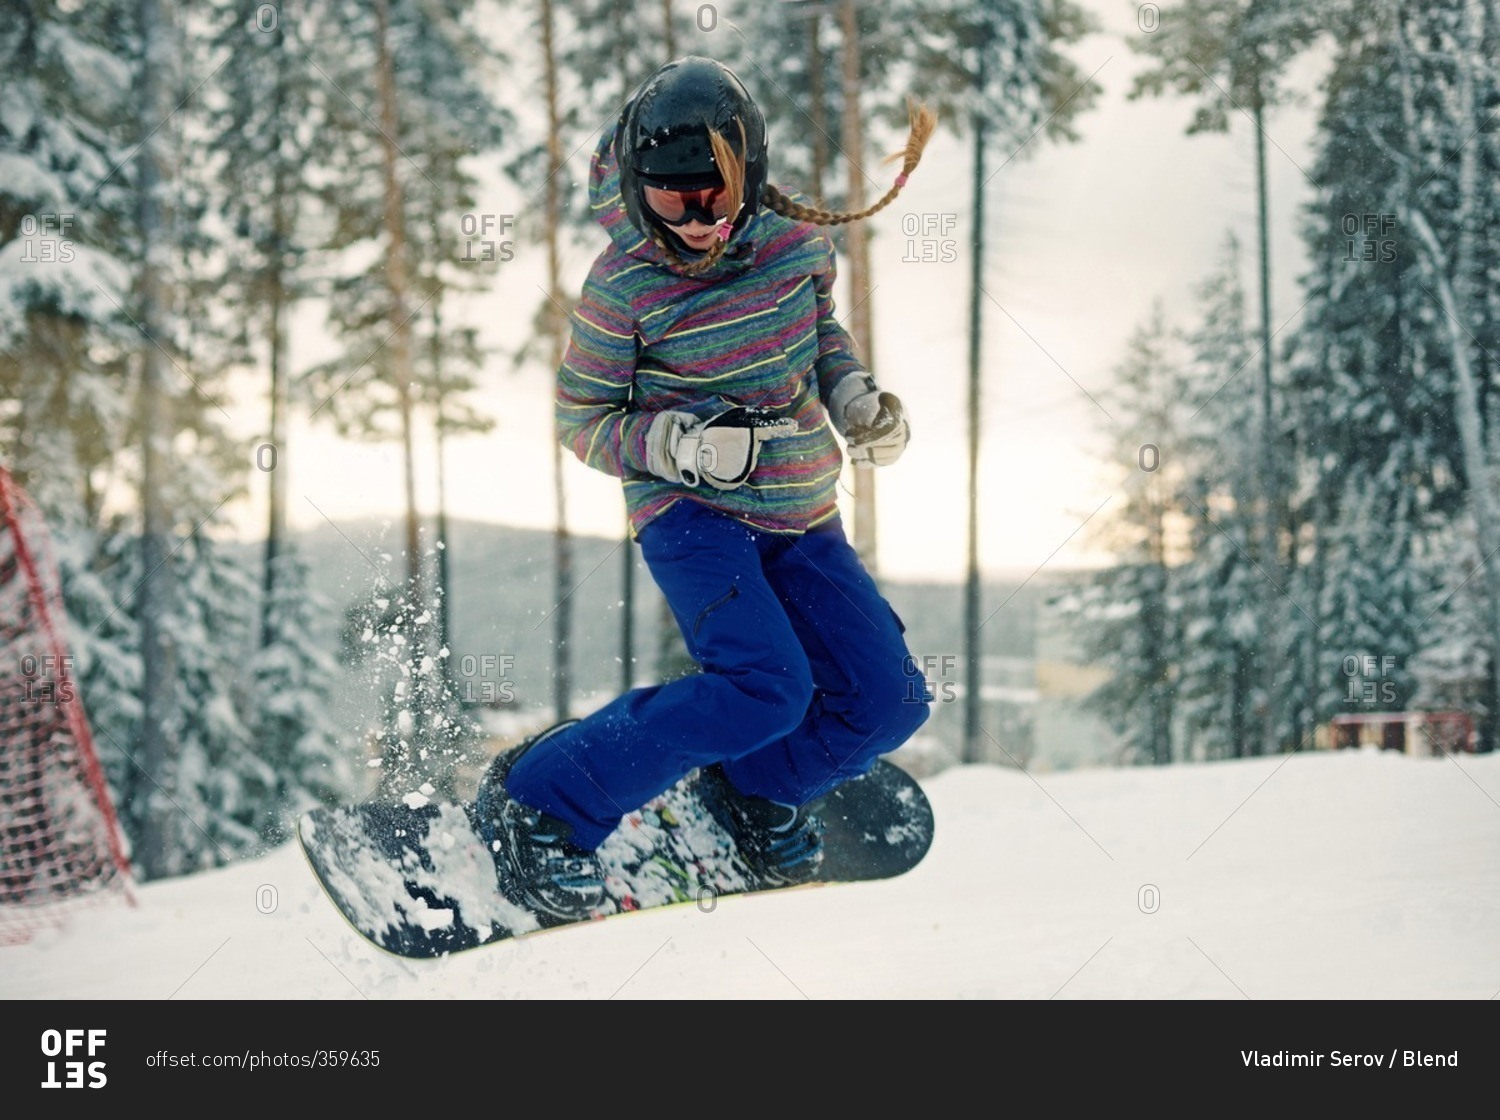 Caucasian girl riding snowboard in snow